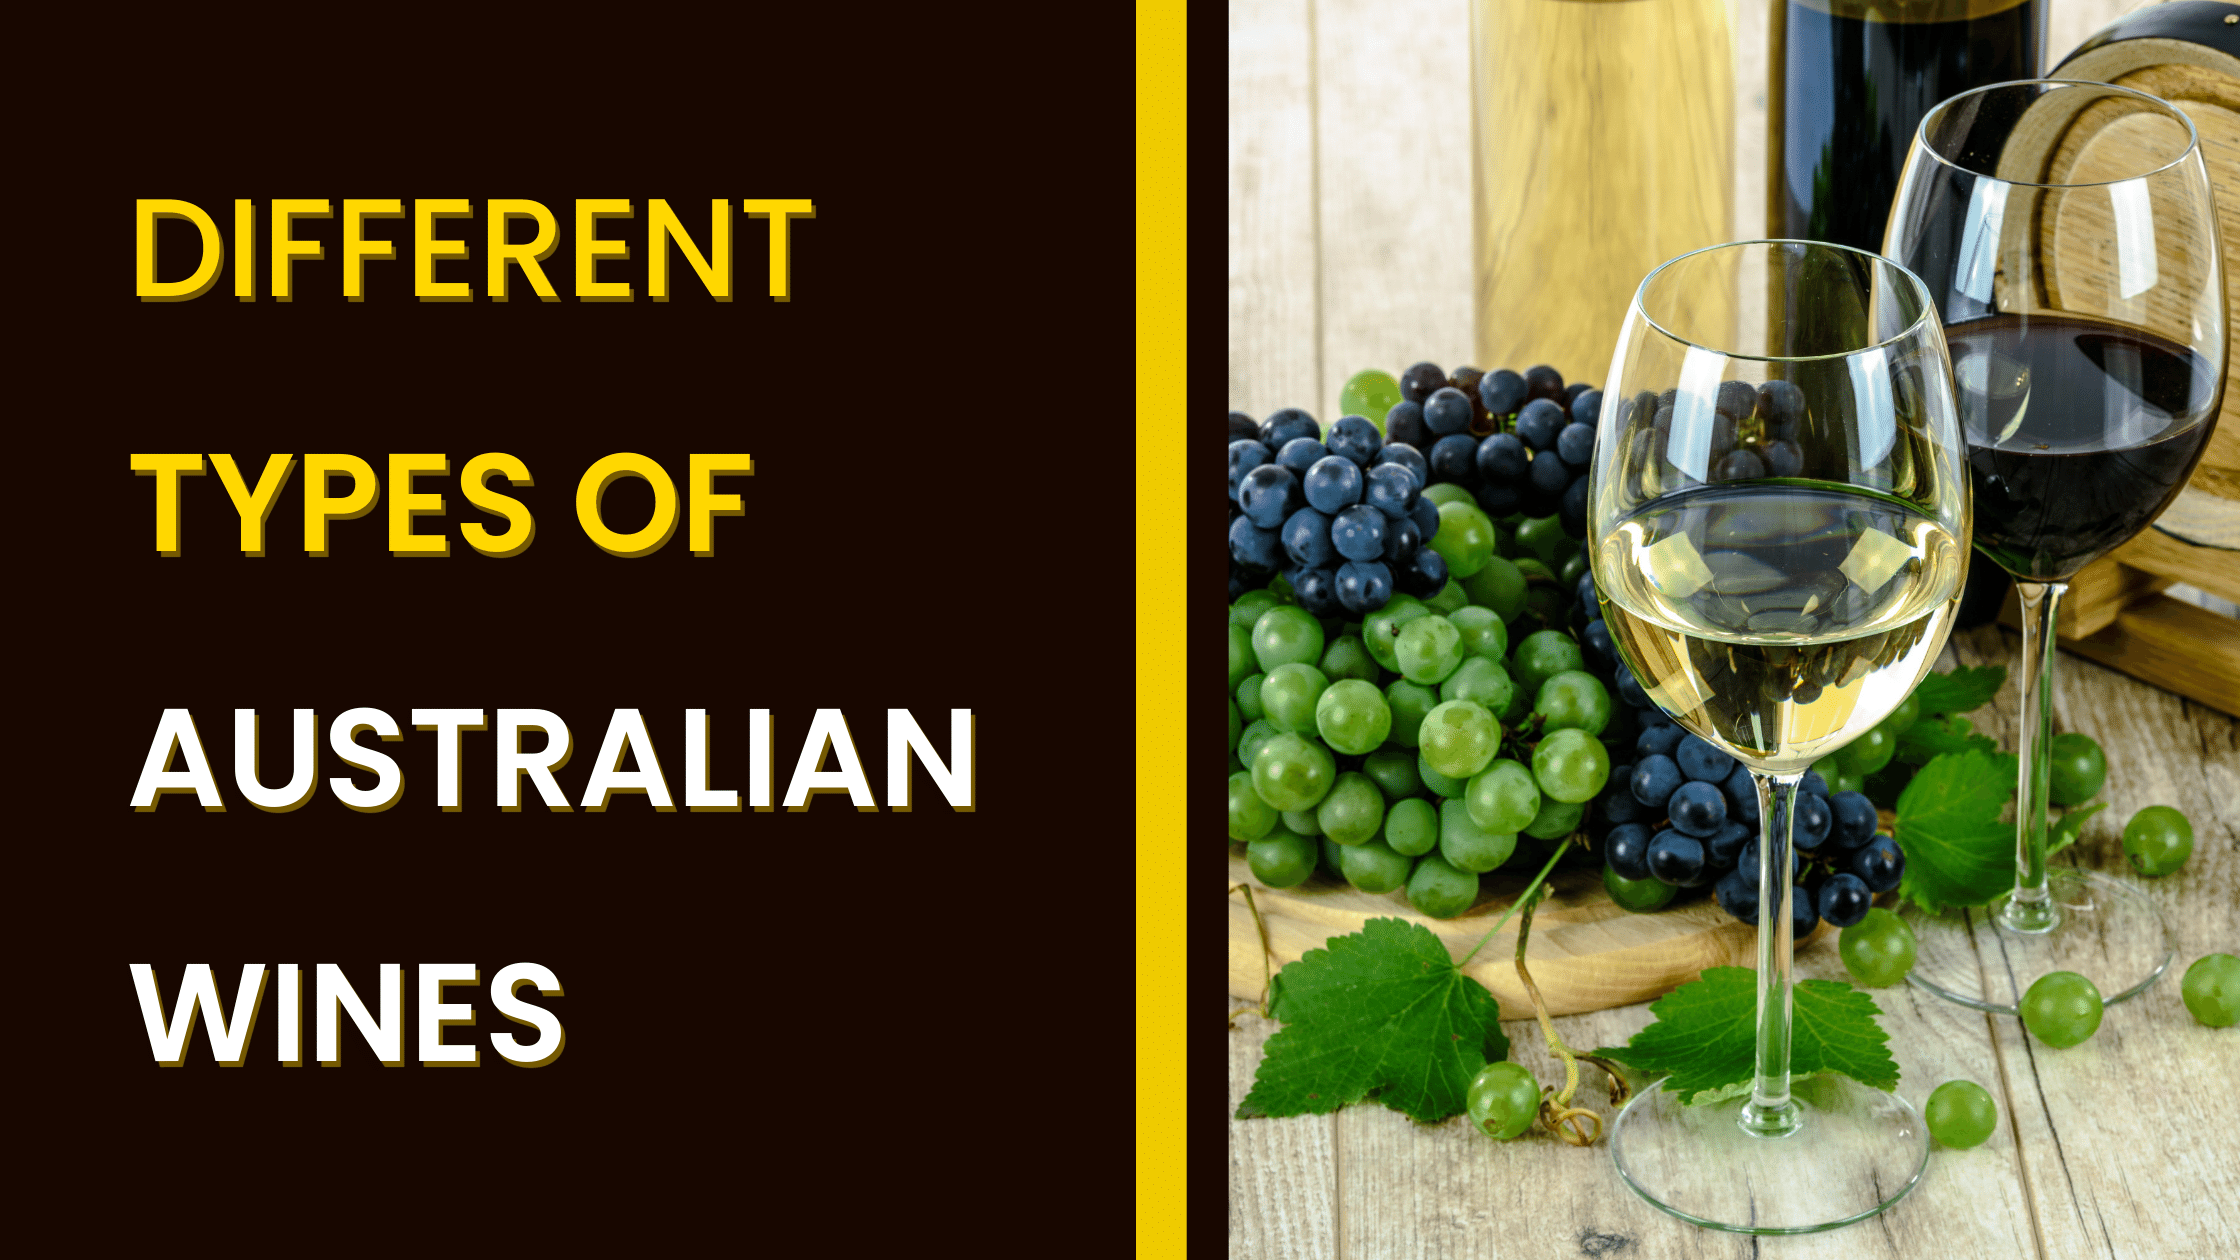 Types of Australian wines